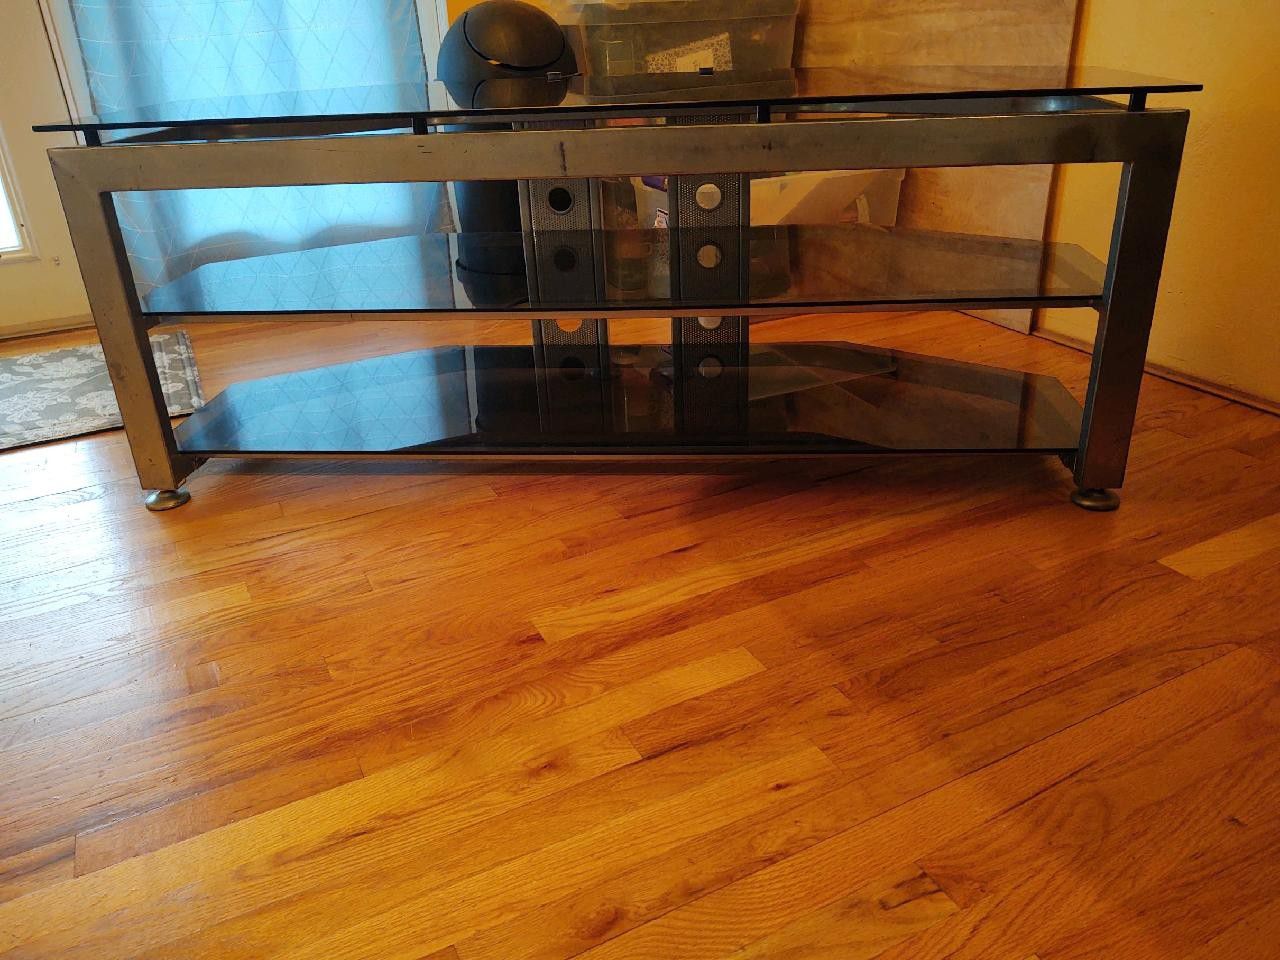 3 shelf glass top TV stand